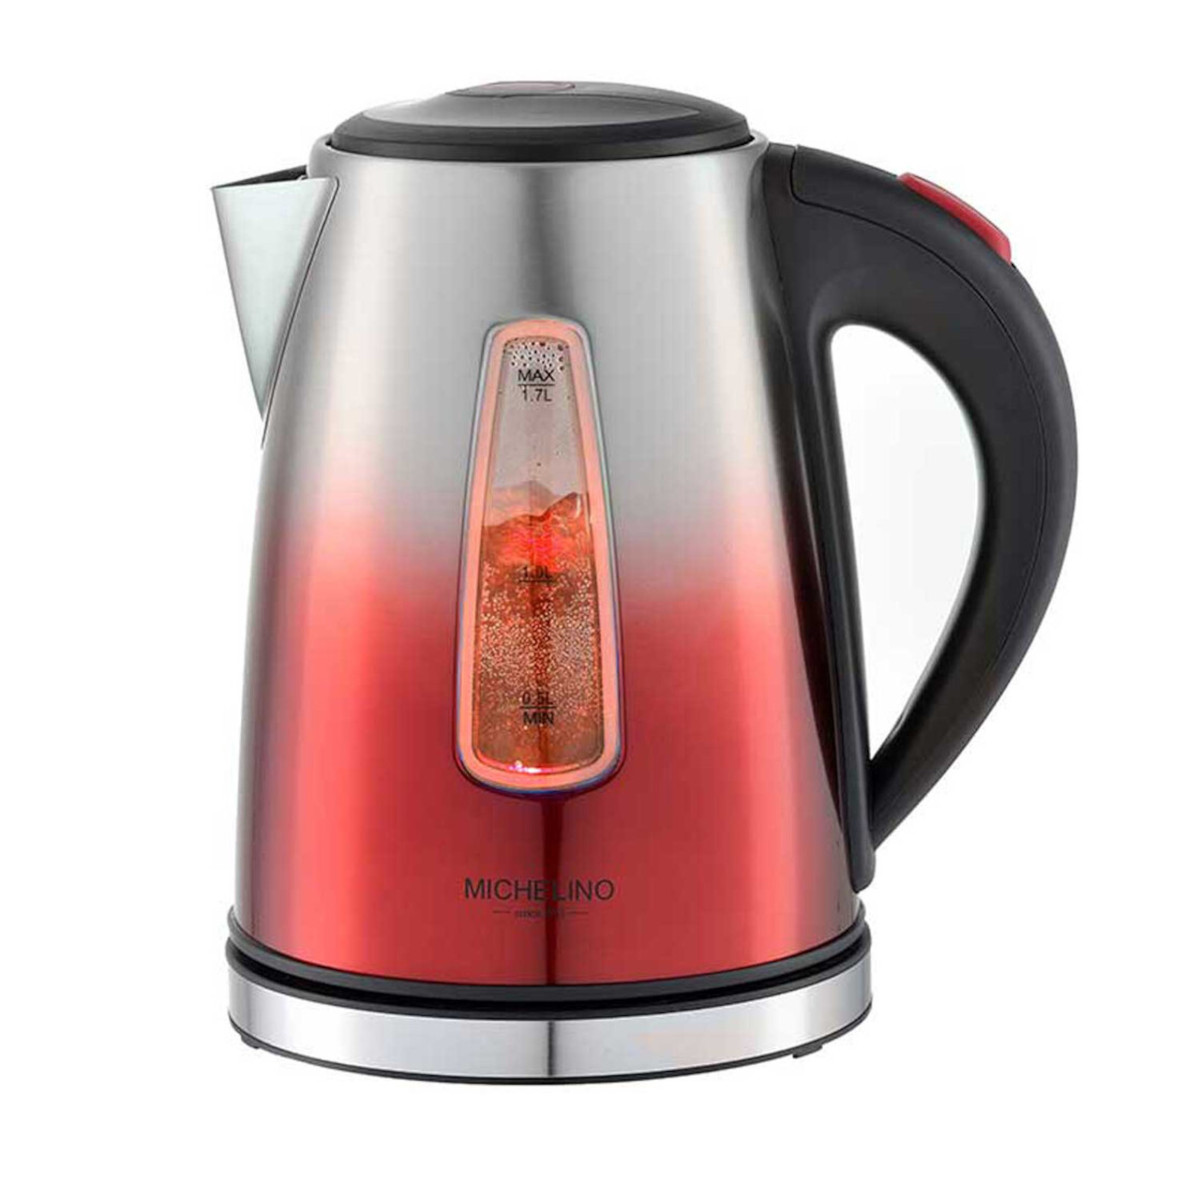 MICHELINO Edelstahl 1,7 L Rot/Silber Beleuchtung , Wasserkocher, Koch-Trocken-Schutz LED Wasserkocher rot